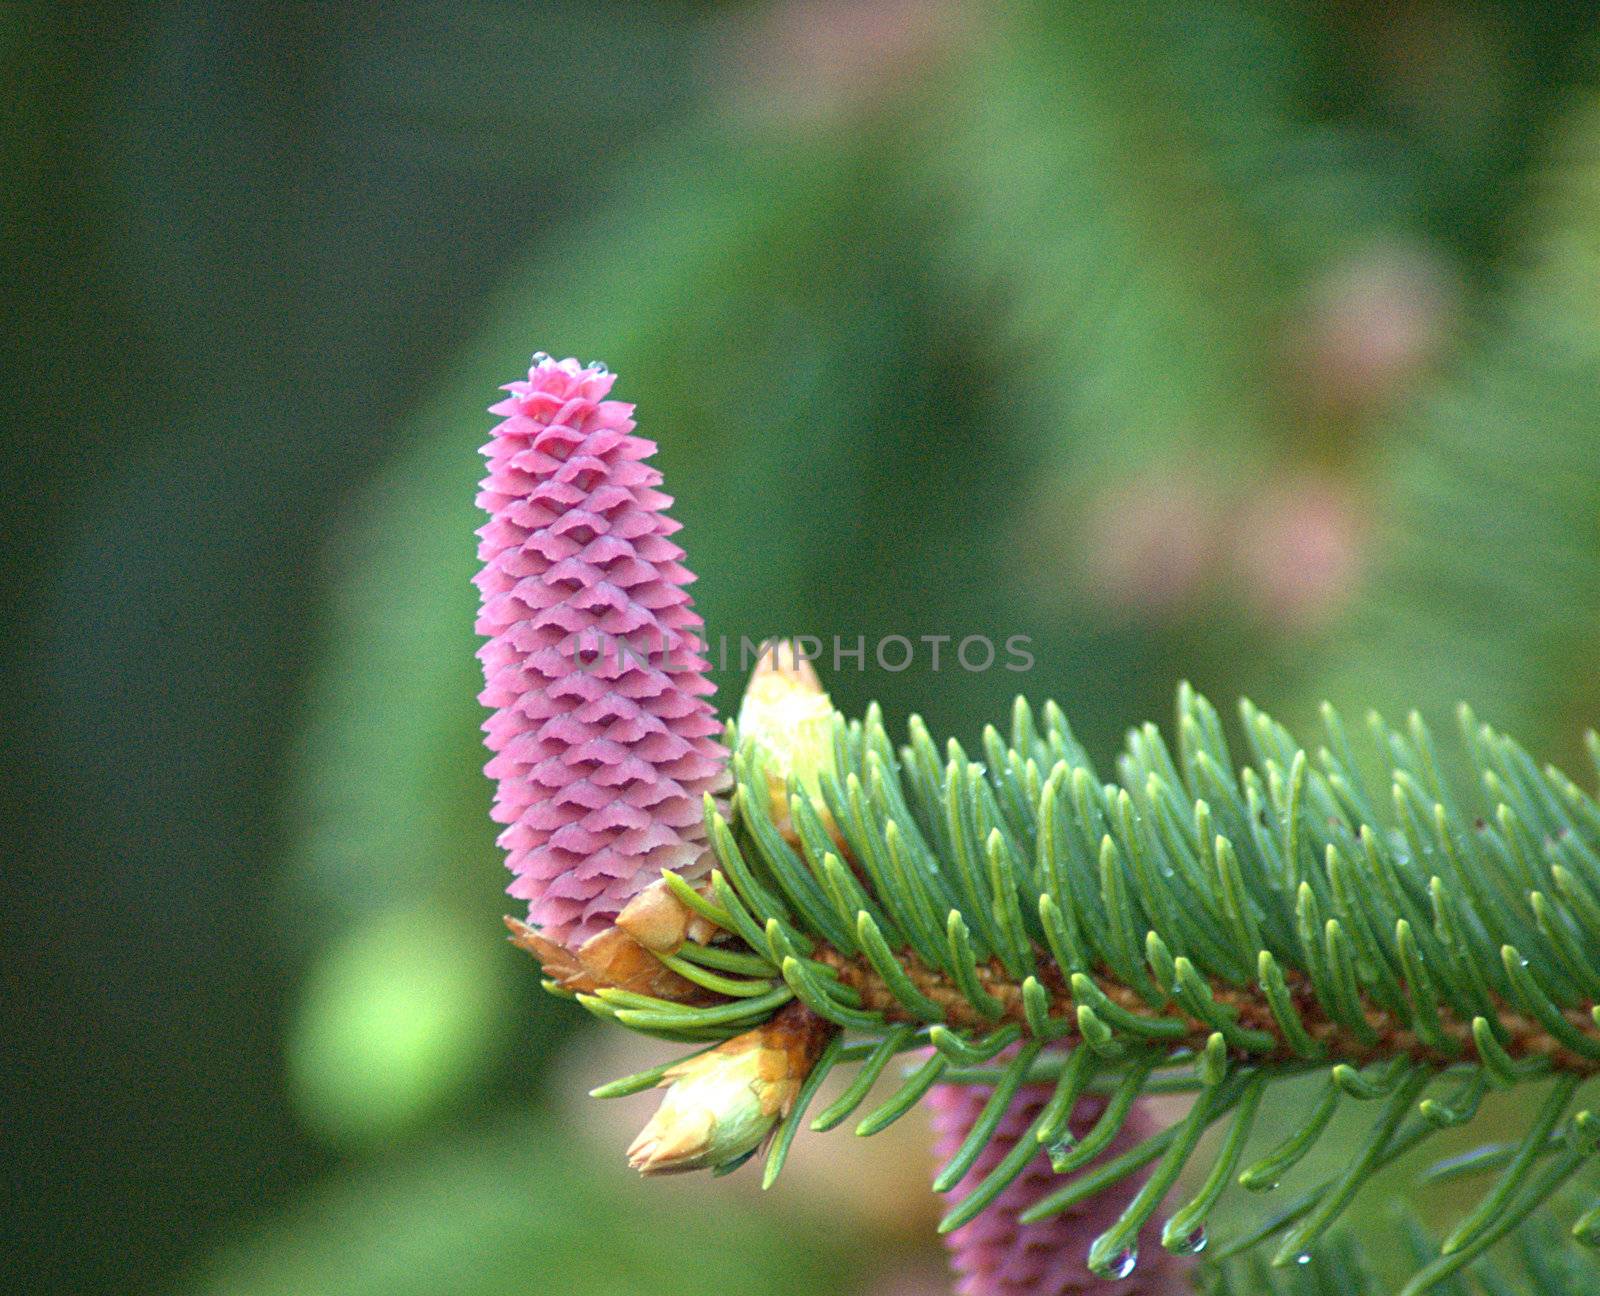 Single purple/pink female spruce cone